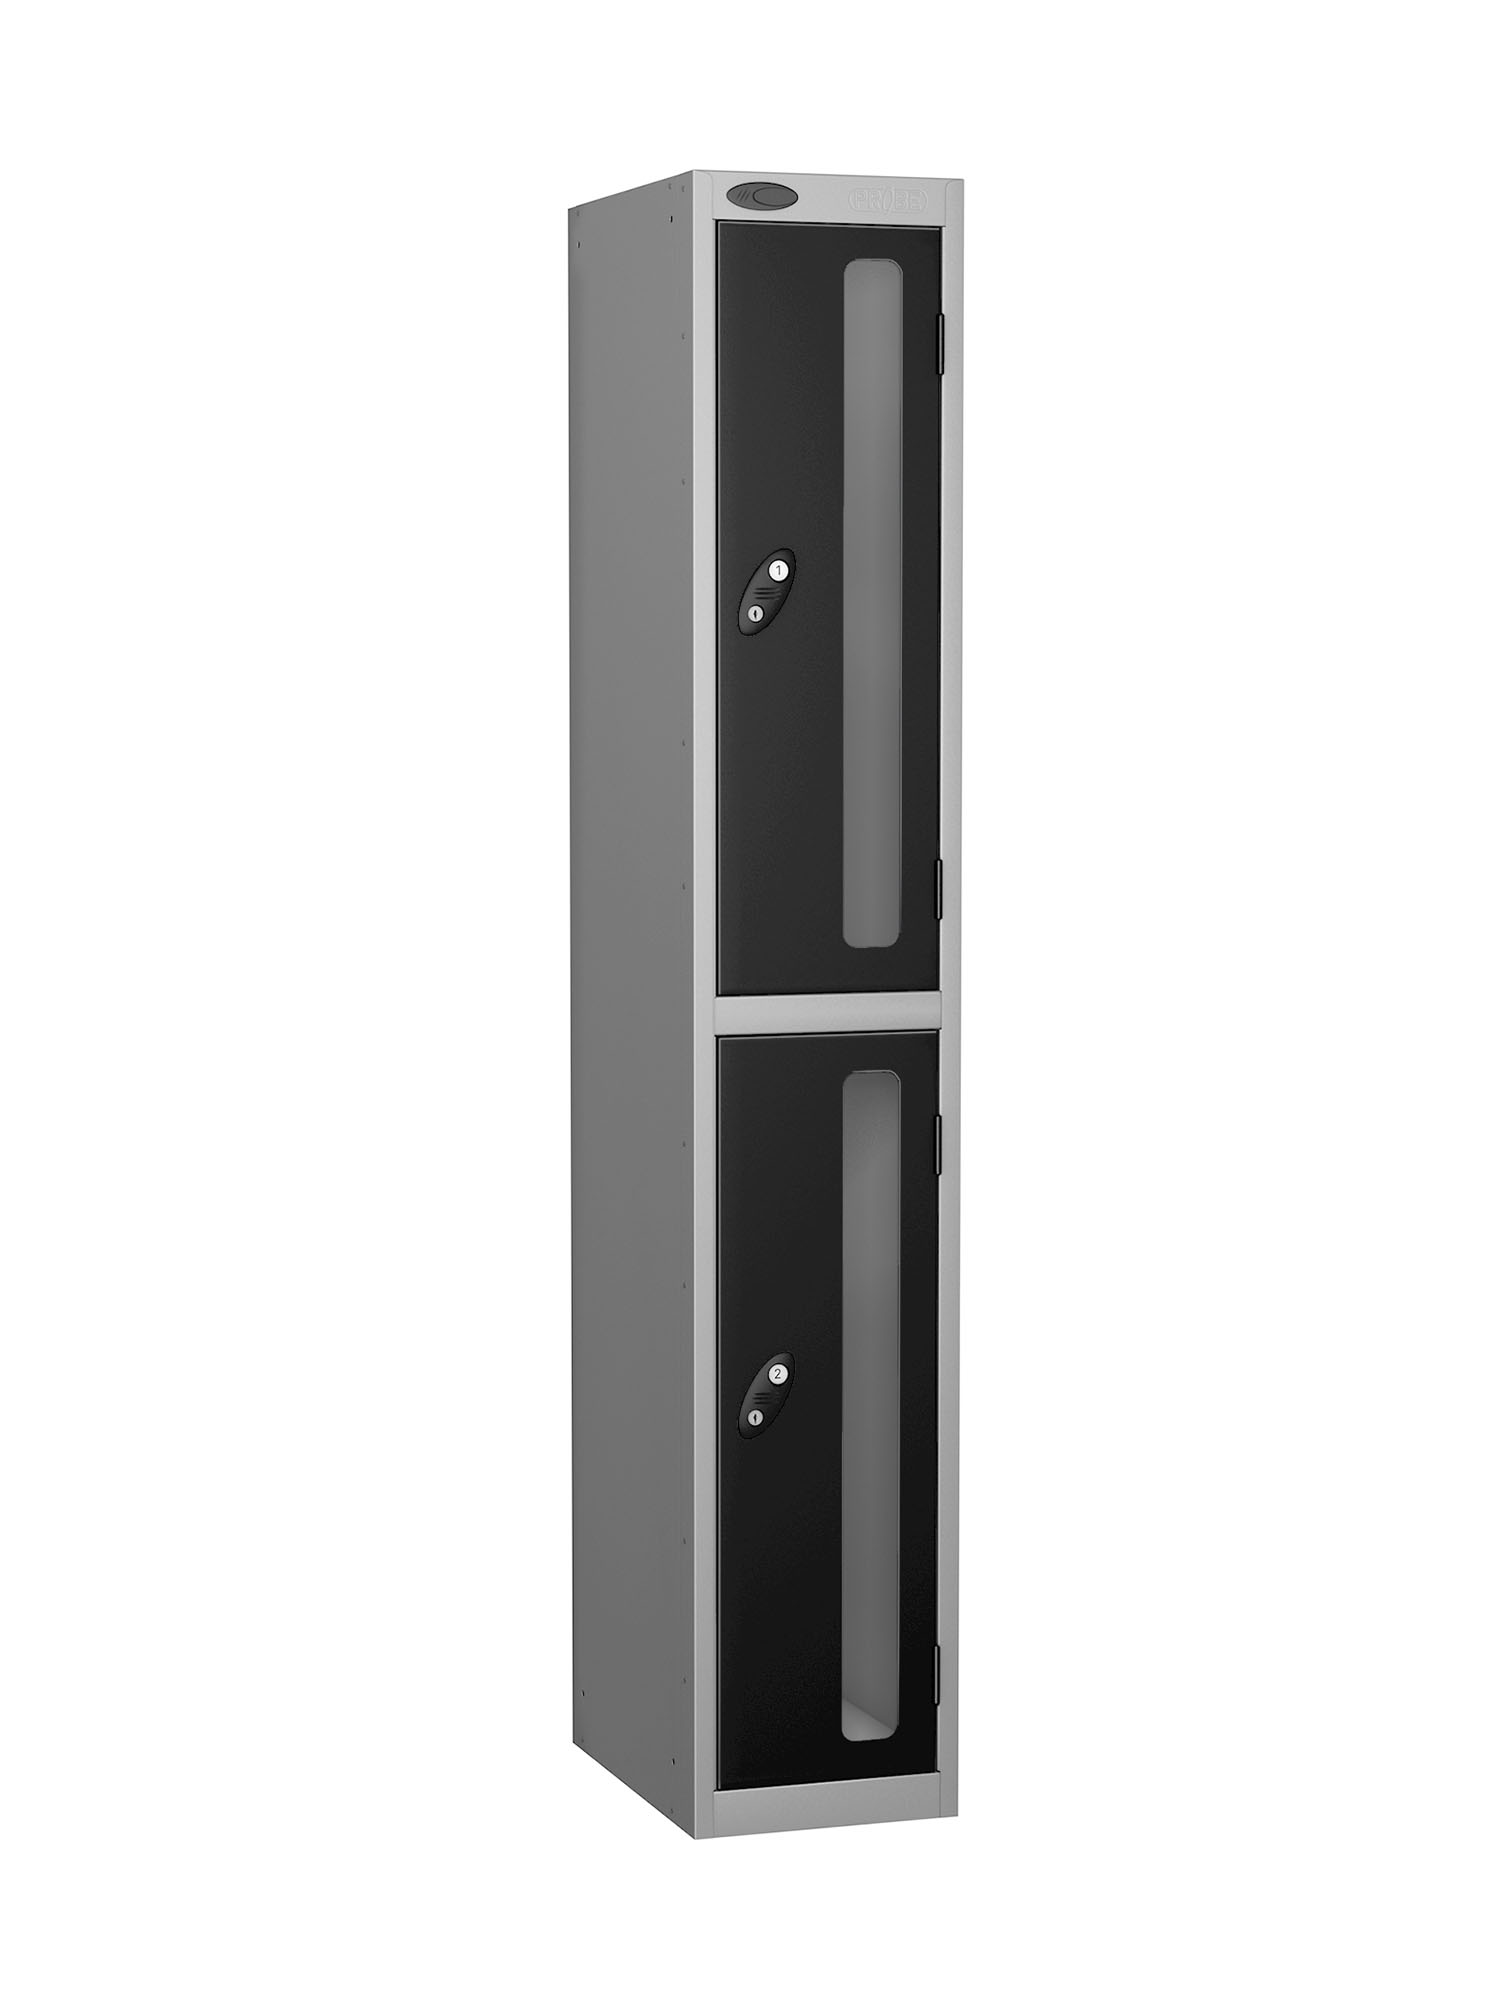 Probe 2 doors vision panel anti-stock theft locker black